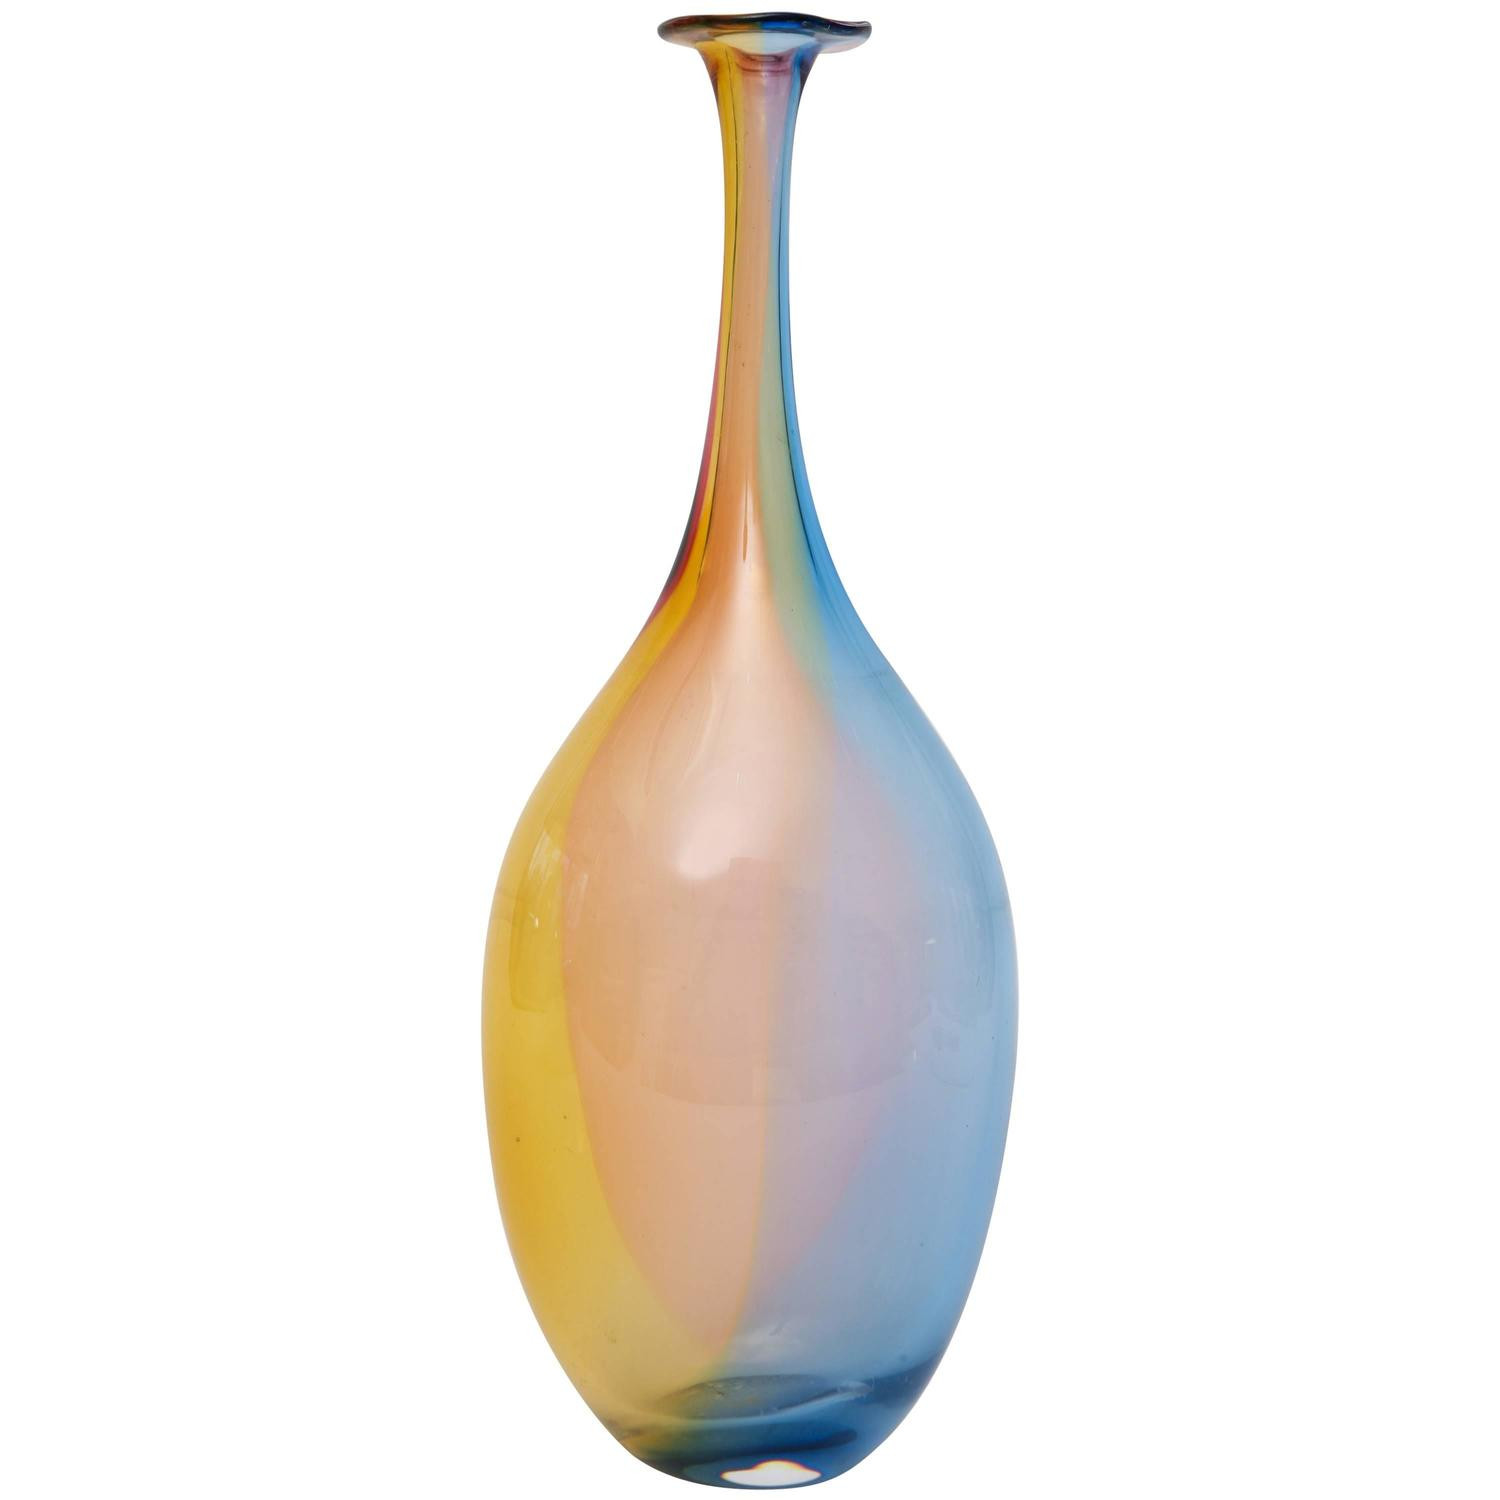 22 Famous Kosta Boda Glass Vase 2022 free download kosta boda glass vase of swedish glass vase by designer kjell engman for sale at 1stdibs within 5203553 z